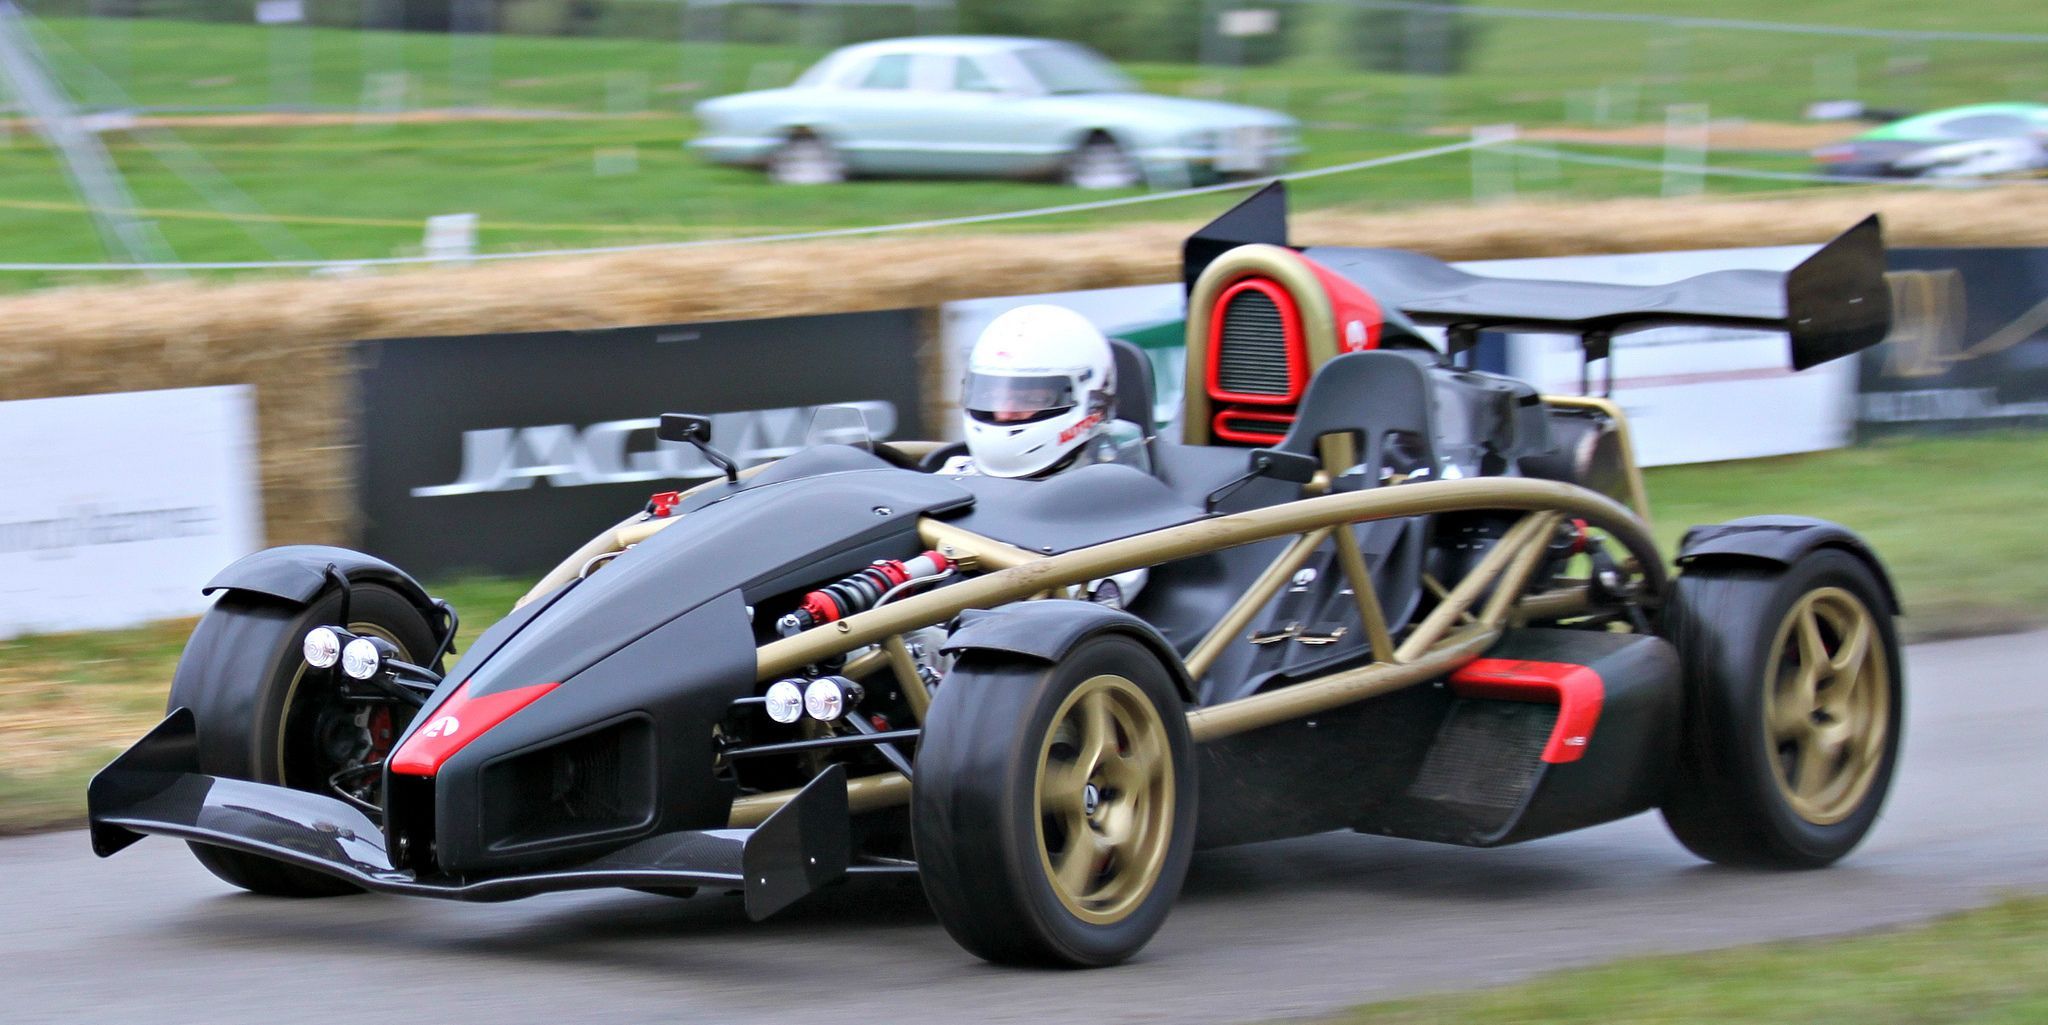 Ariel Atom 500 V8 on the track